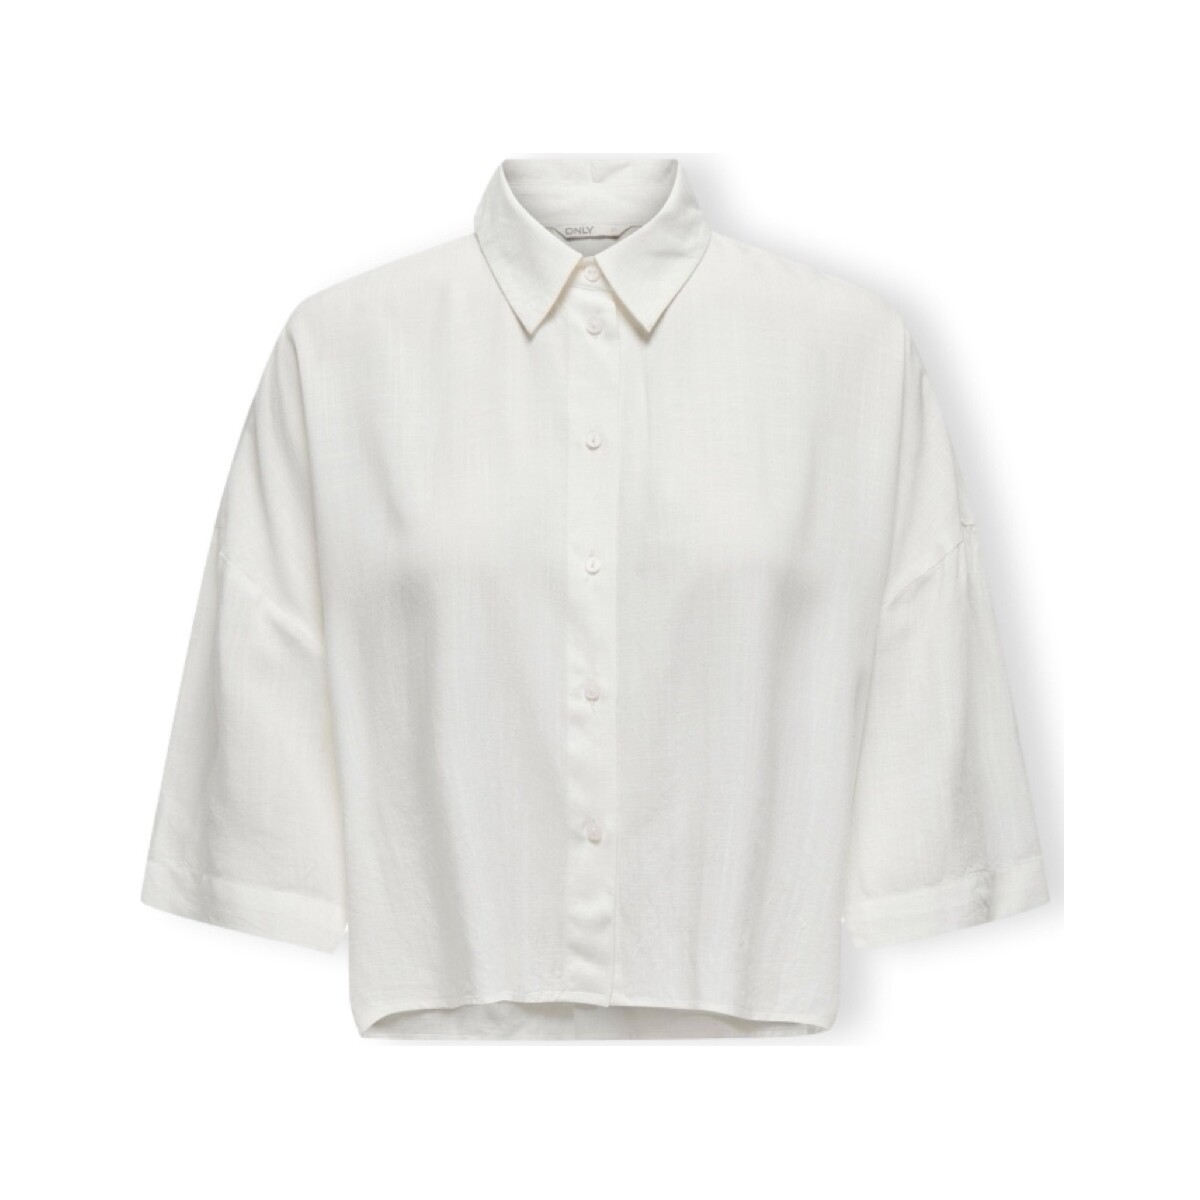 Abbigliamento Donna Top / Blusa Only Noos Astrid Life Shirt 2/4 - Cloud Dancer Bianco